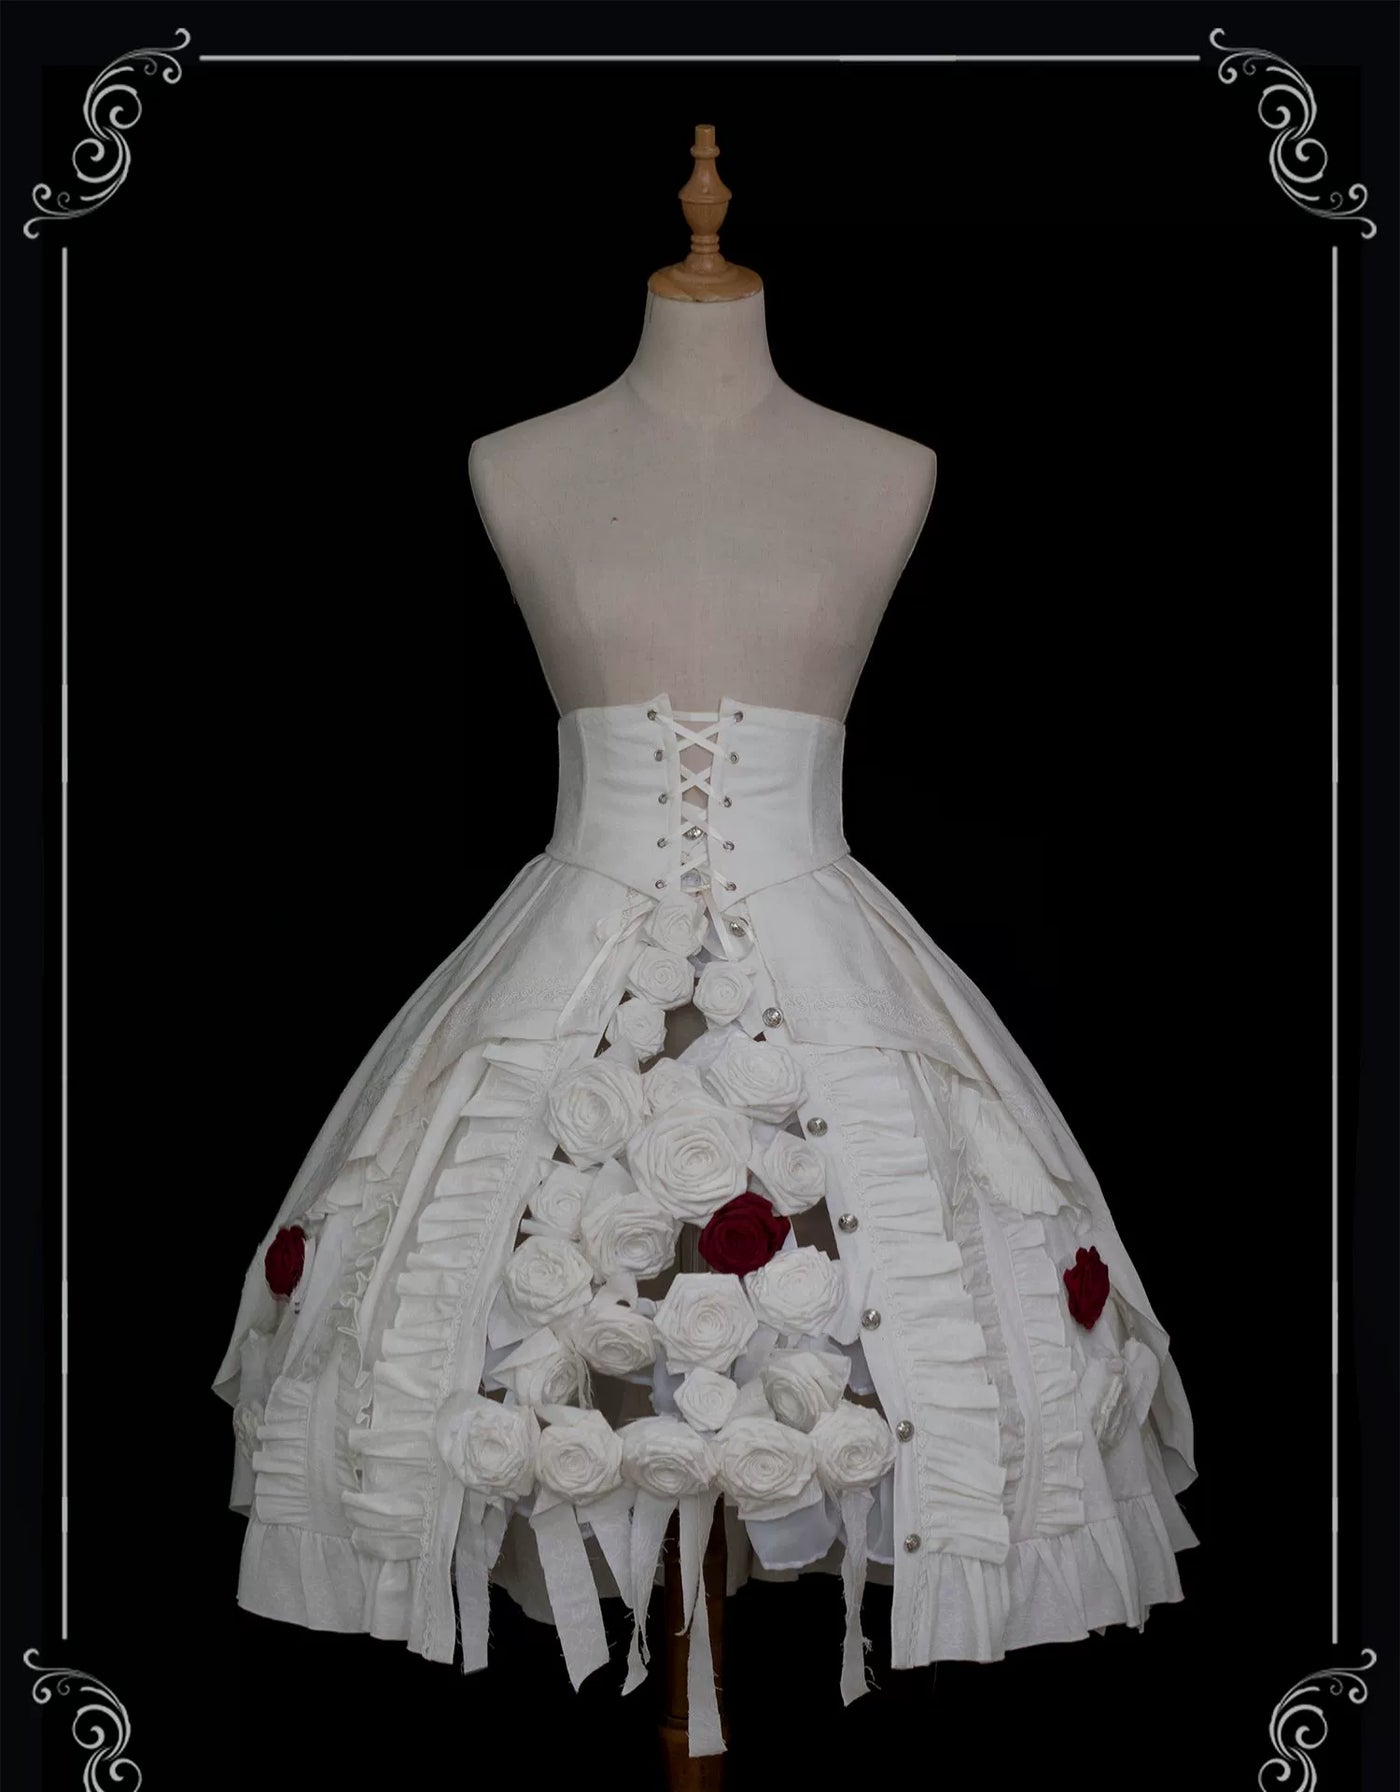 Sweet Dream~Elegant Lolita Wedding Bridal Birdcage SK free size white SK 